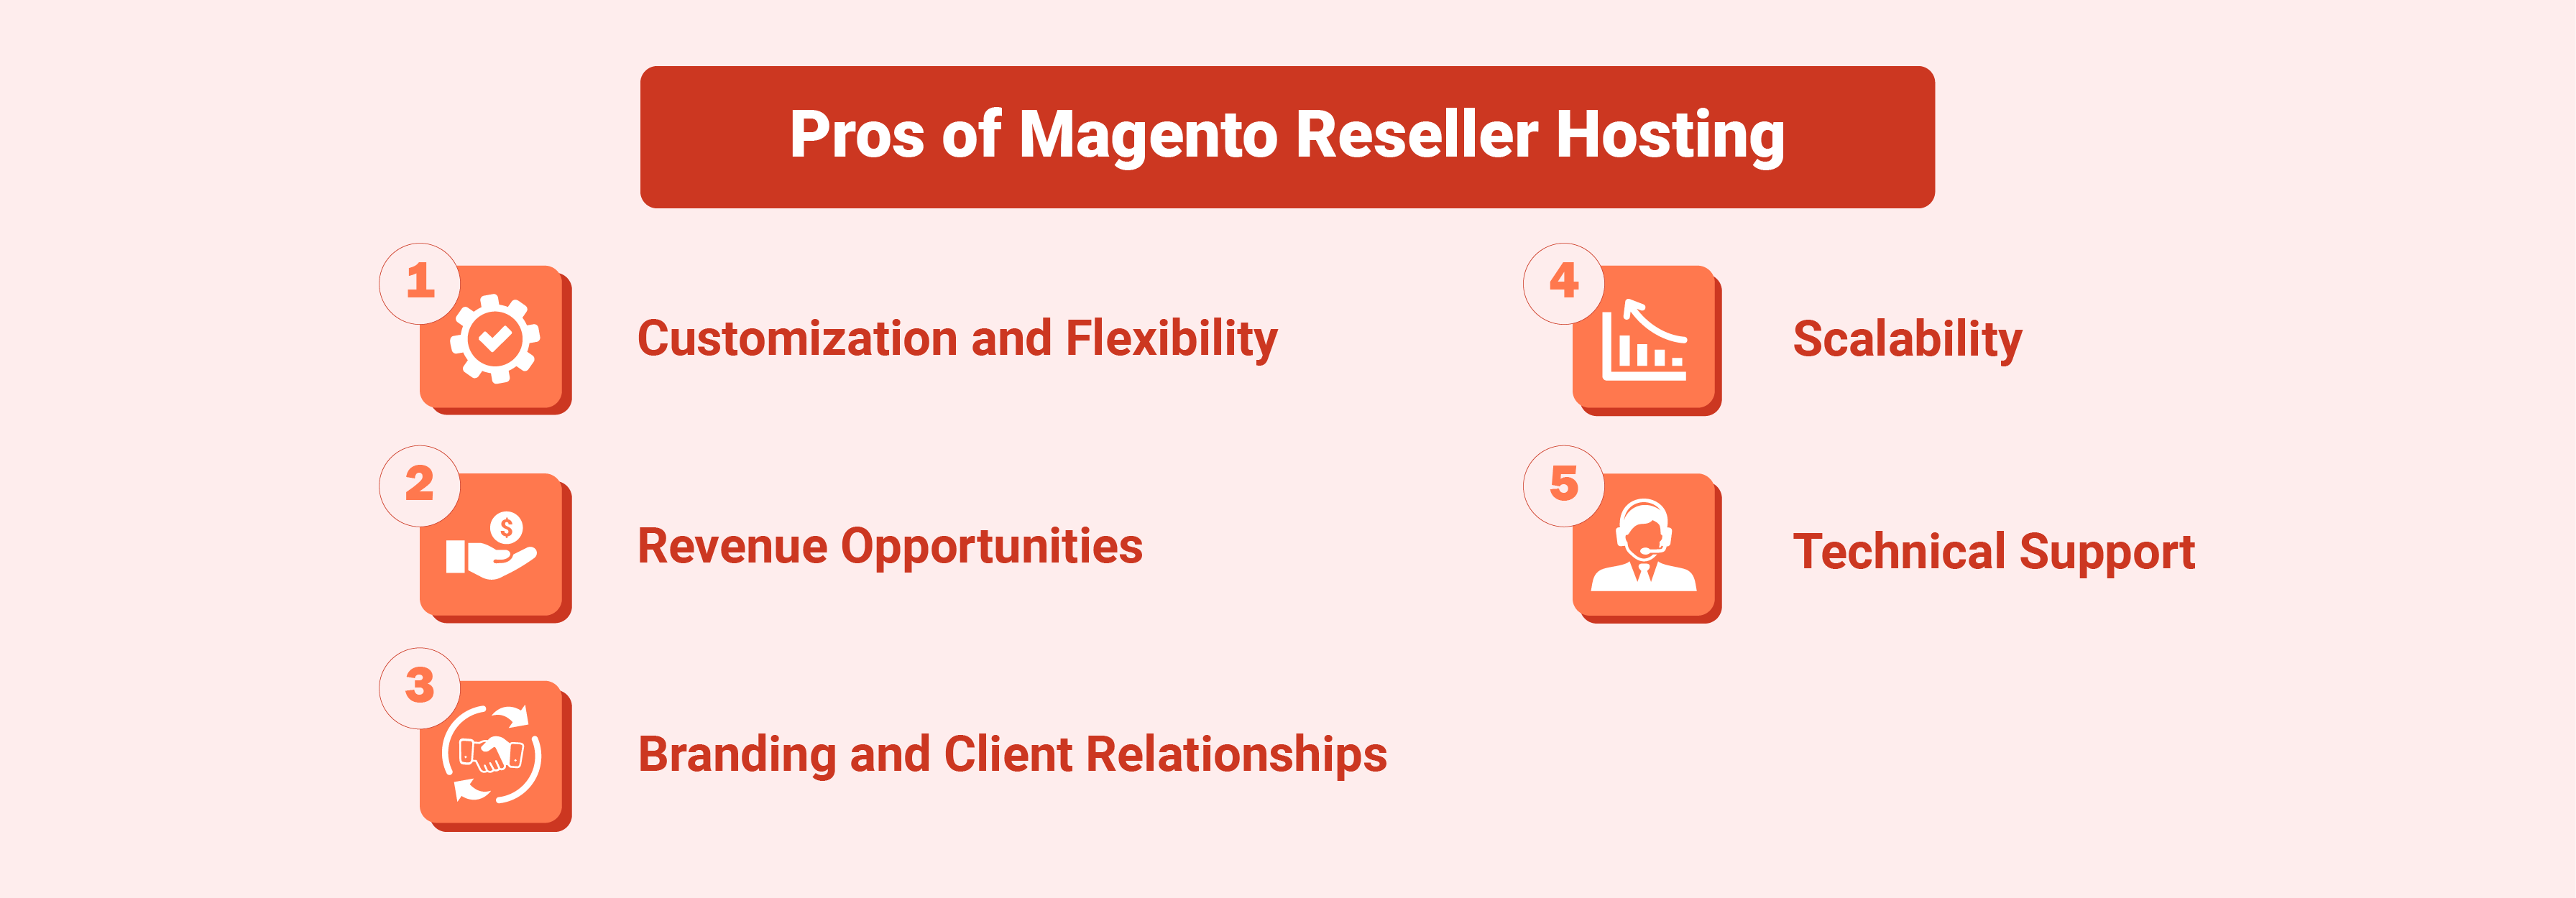 Pros of Magento Reseller Hosting